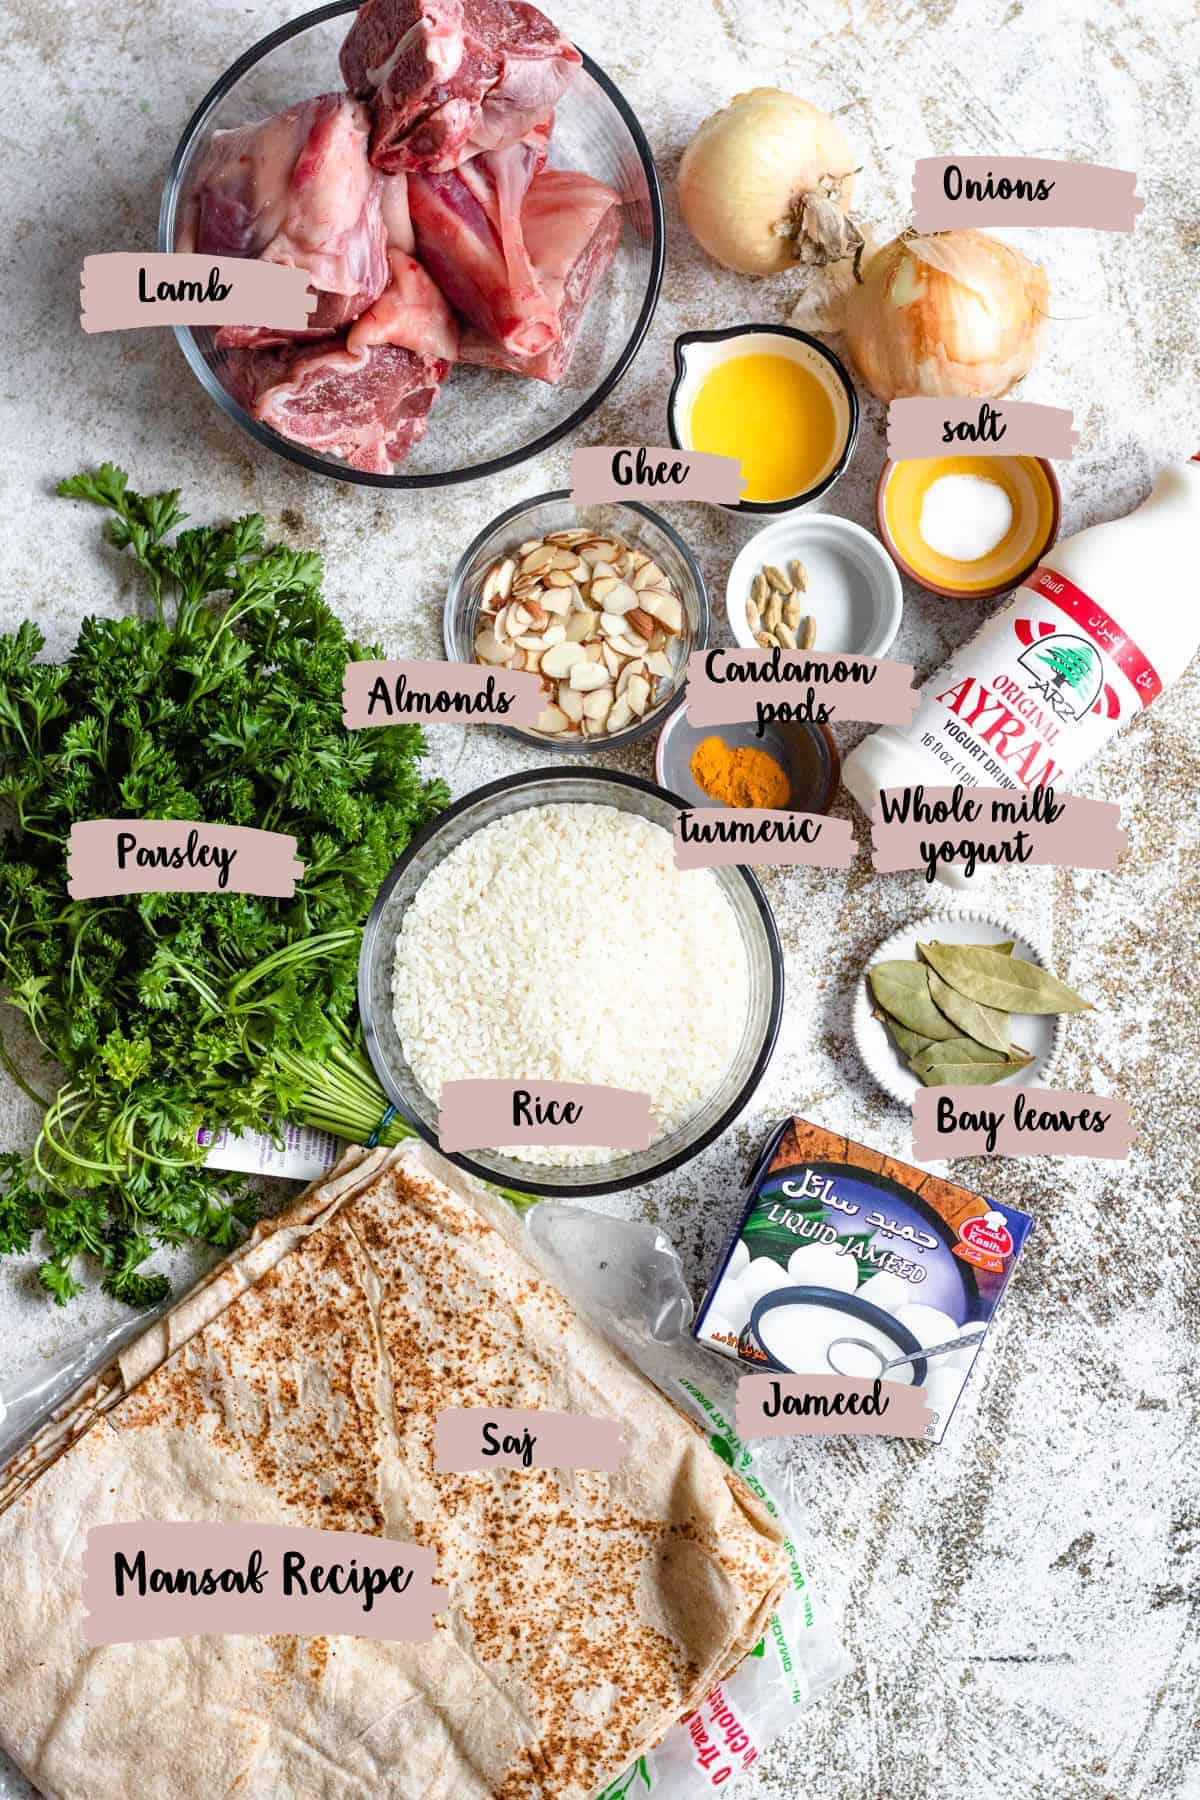 Ingredients shown are used to prepare mansaf. 